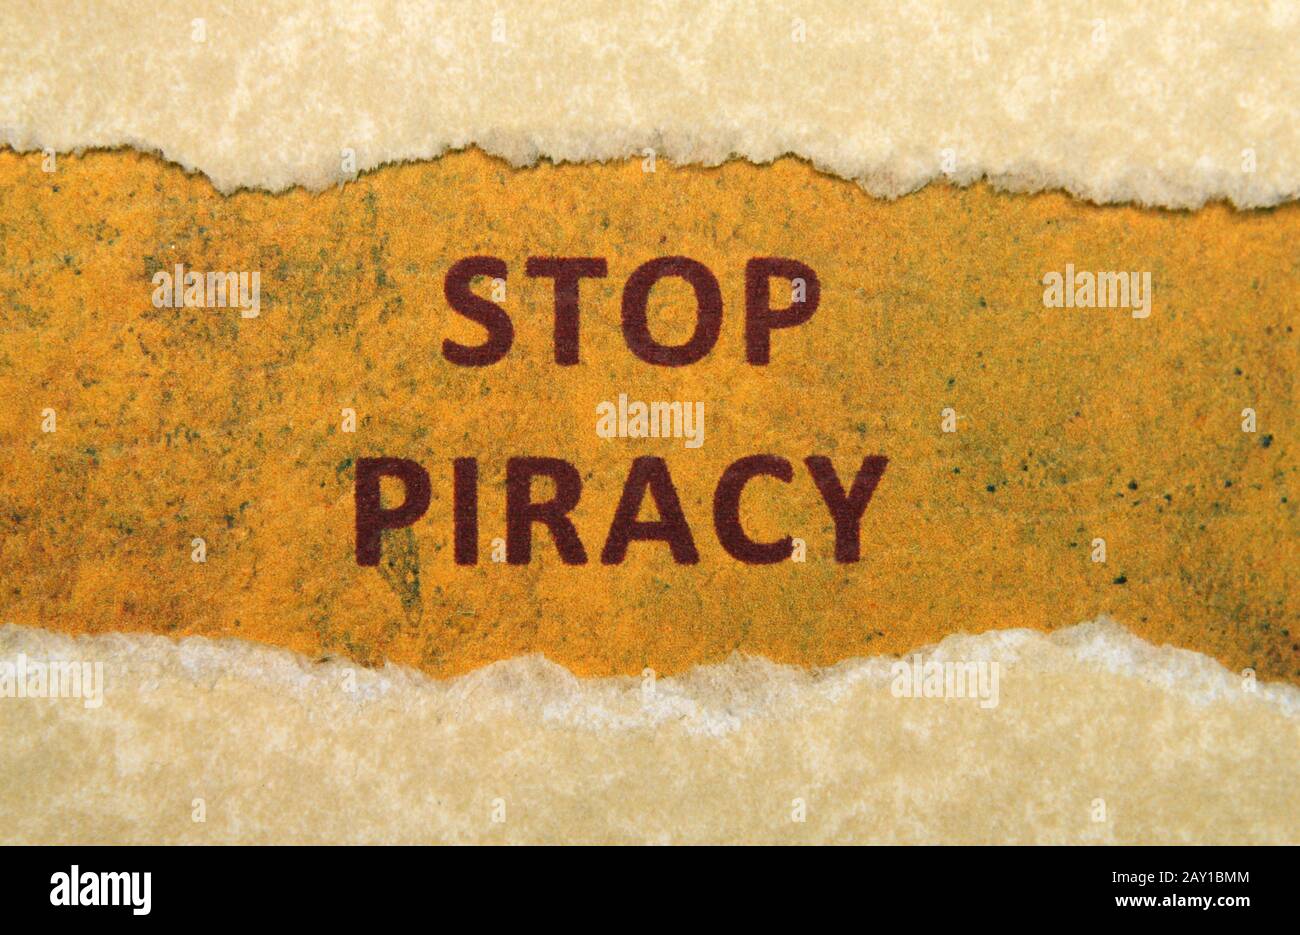 Stop piracy Stock Photo